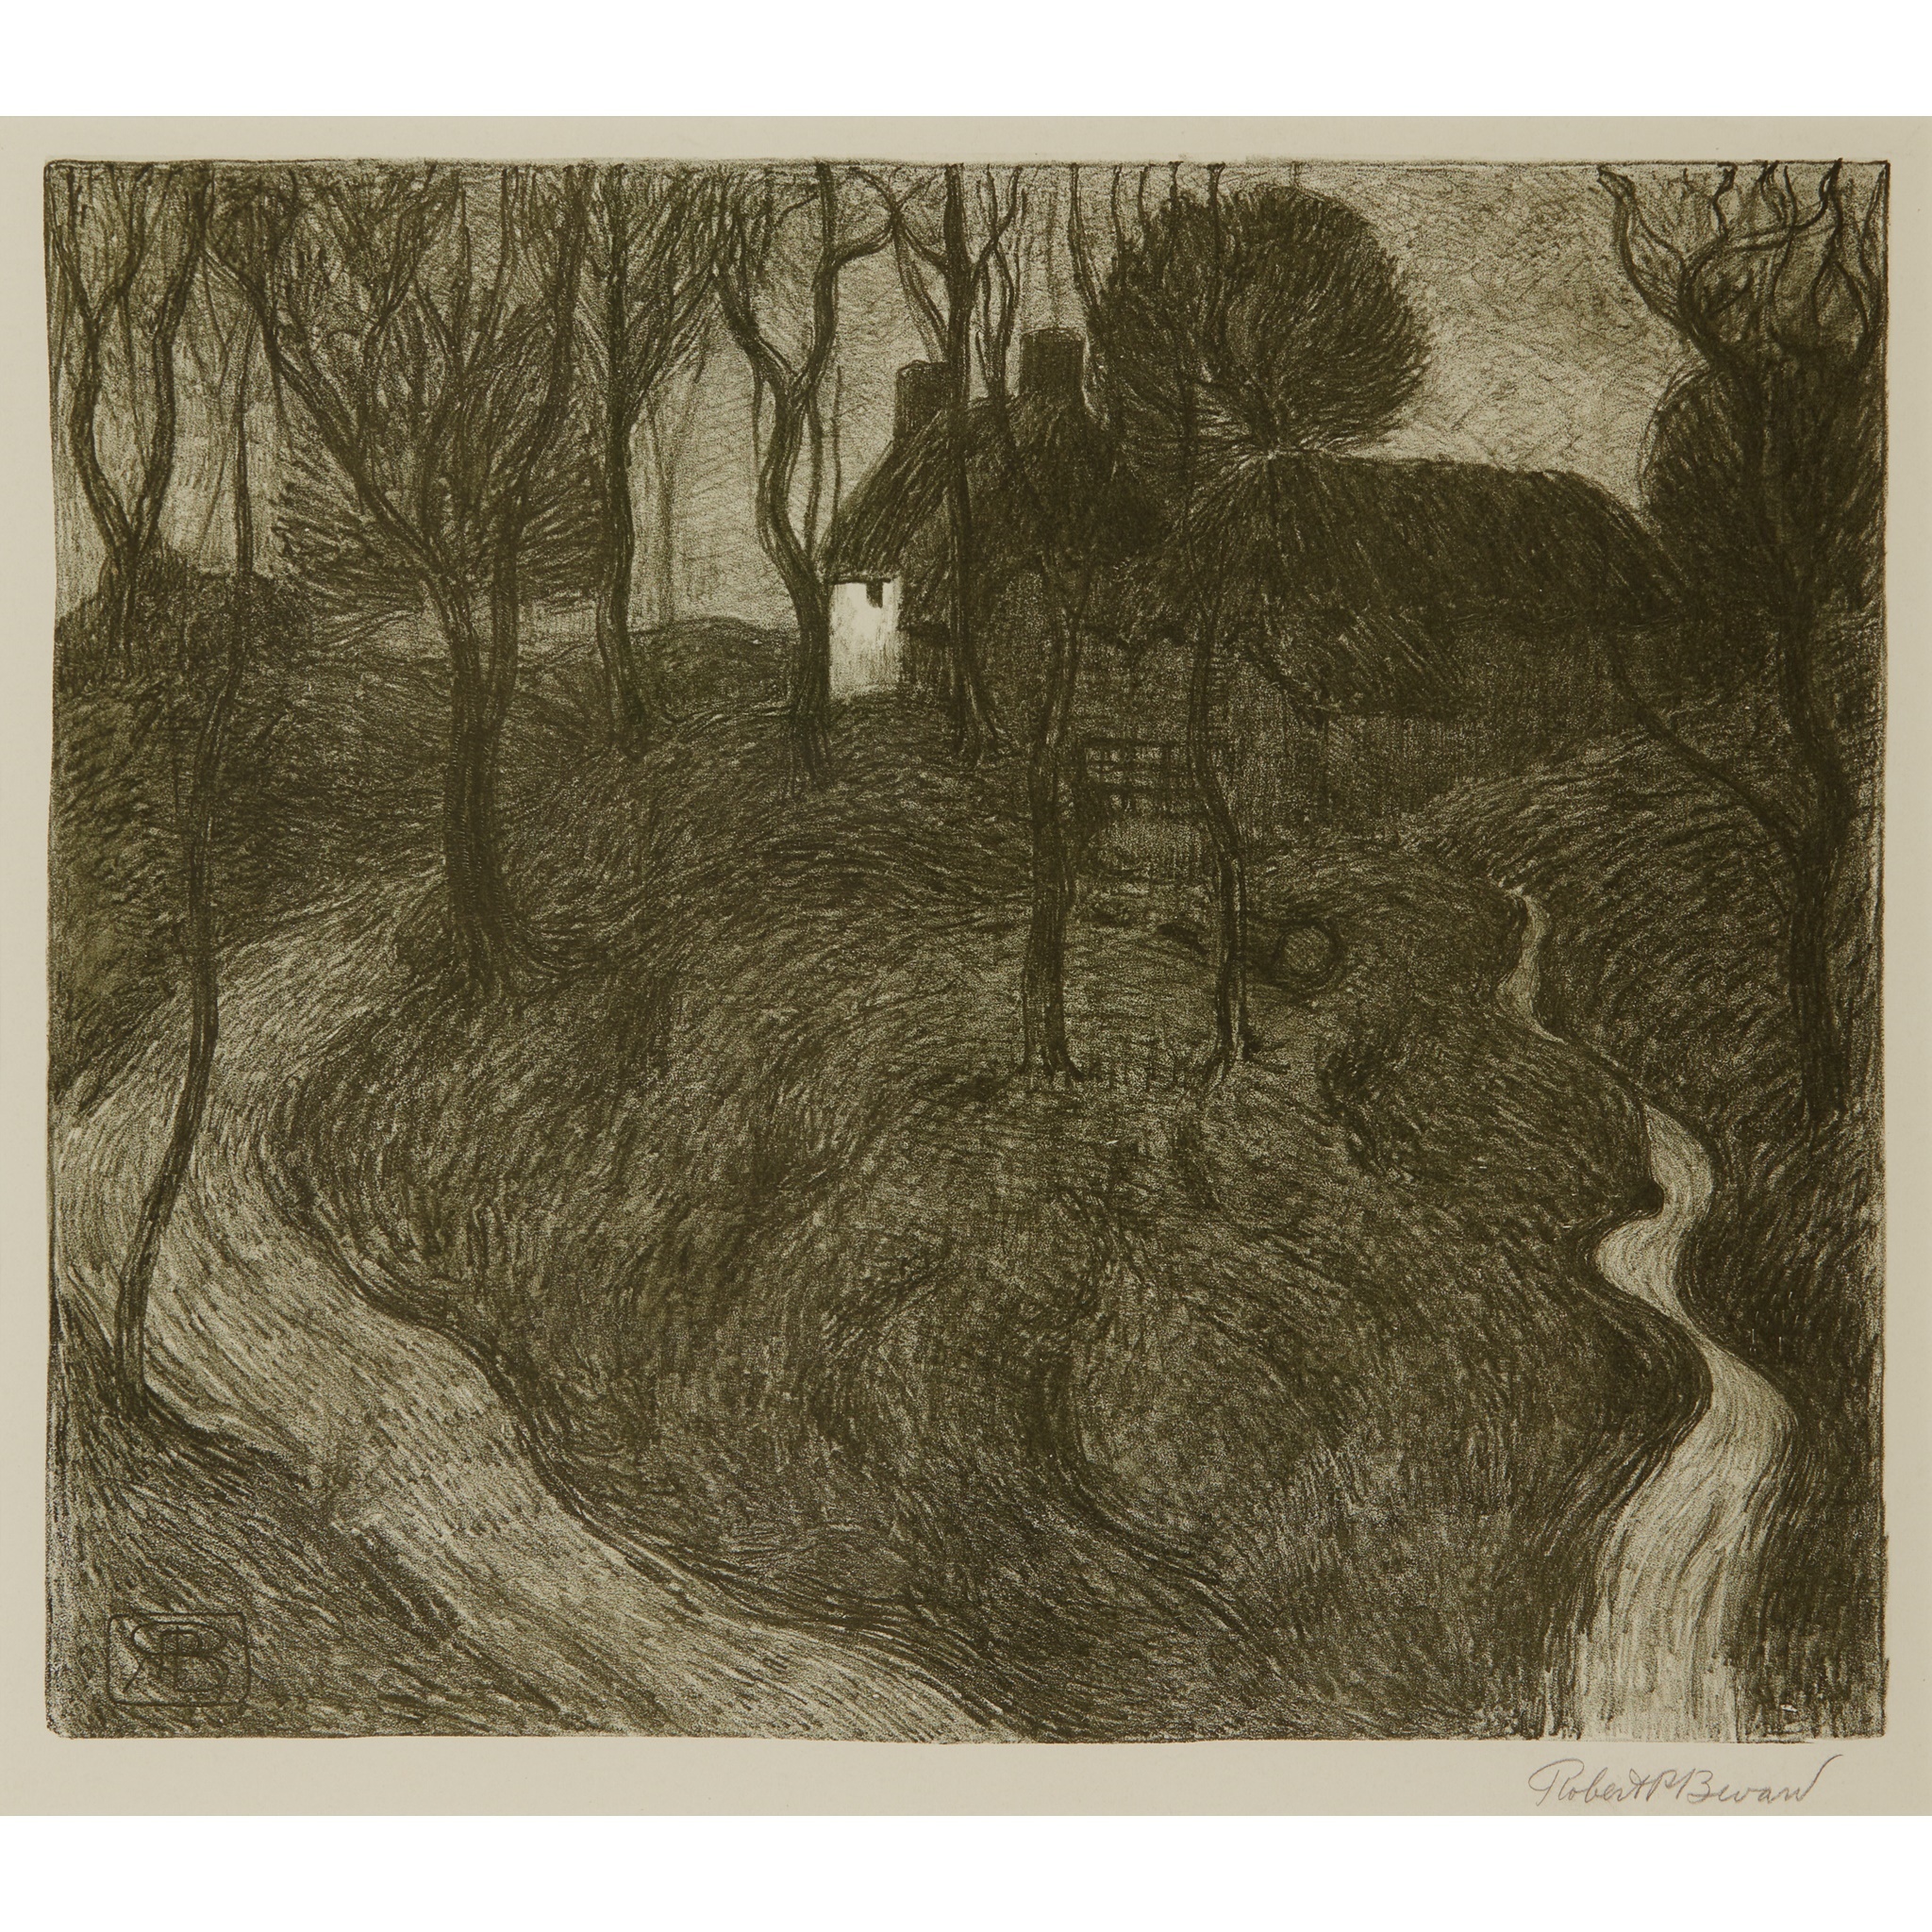 Hawkridge (A Lonely Farm) 1900, Robert Bevan